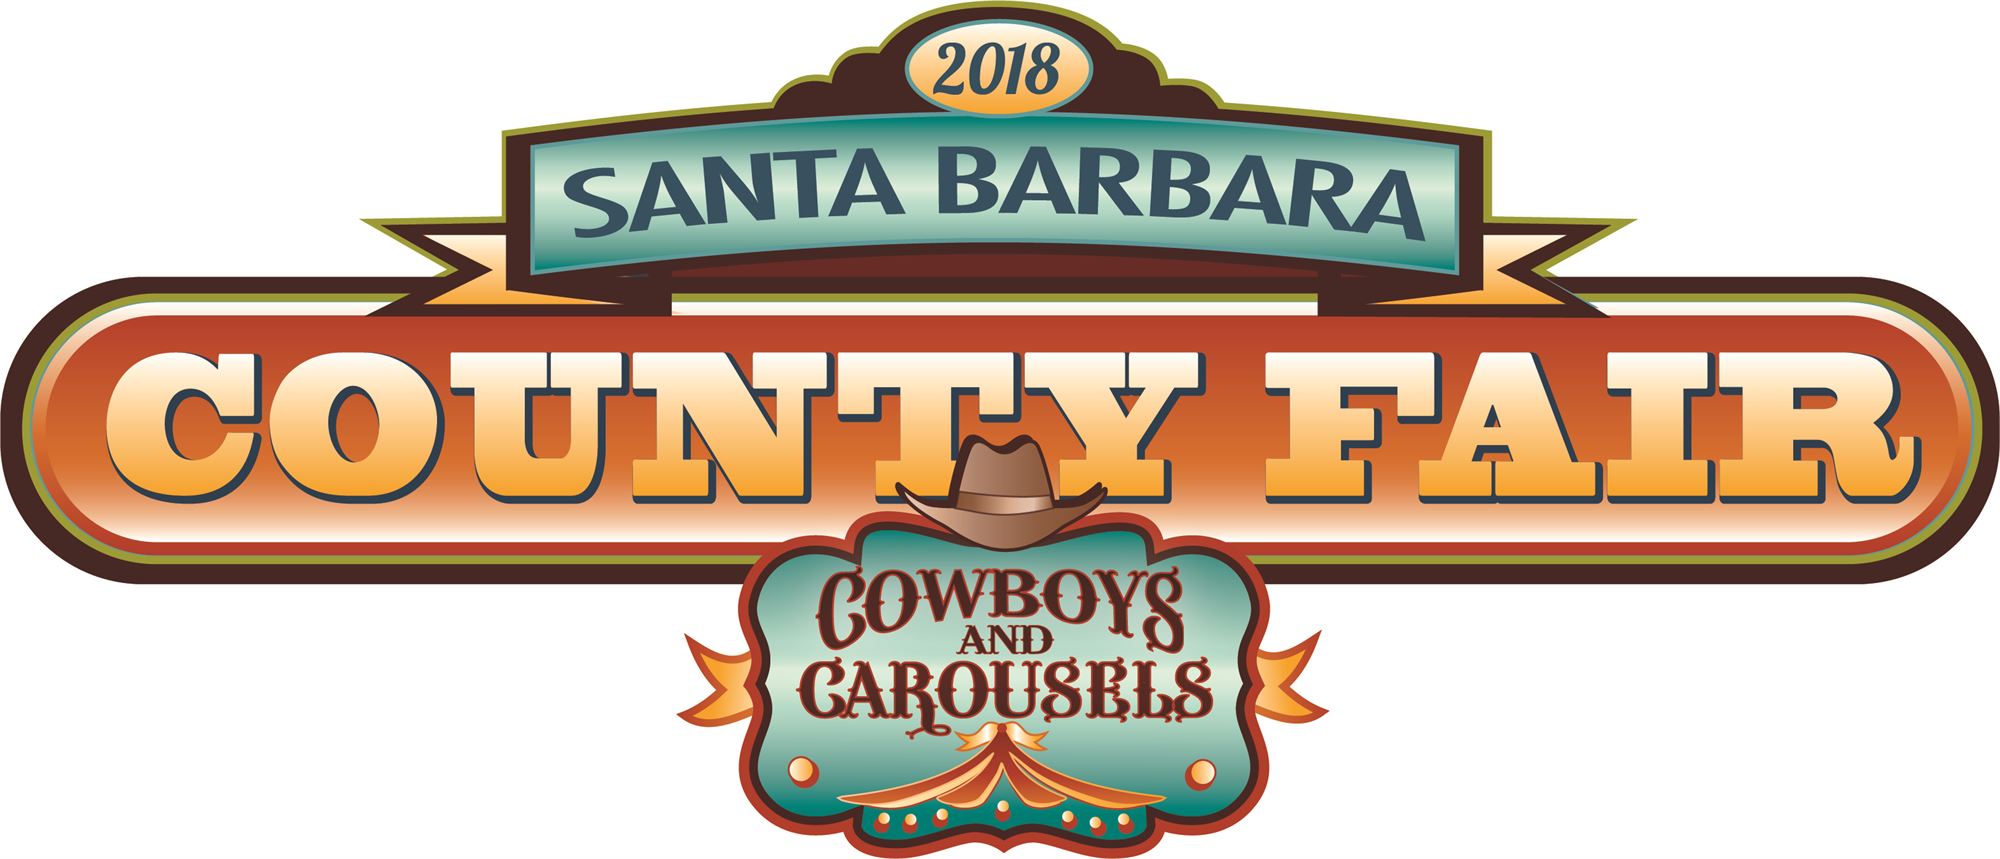 2018 Santa Barbara County Fair